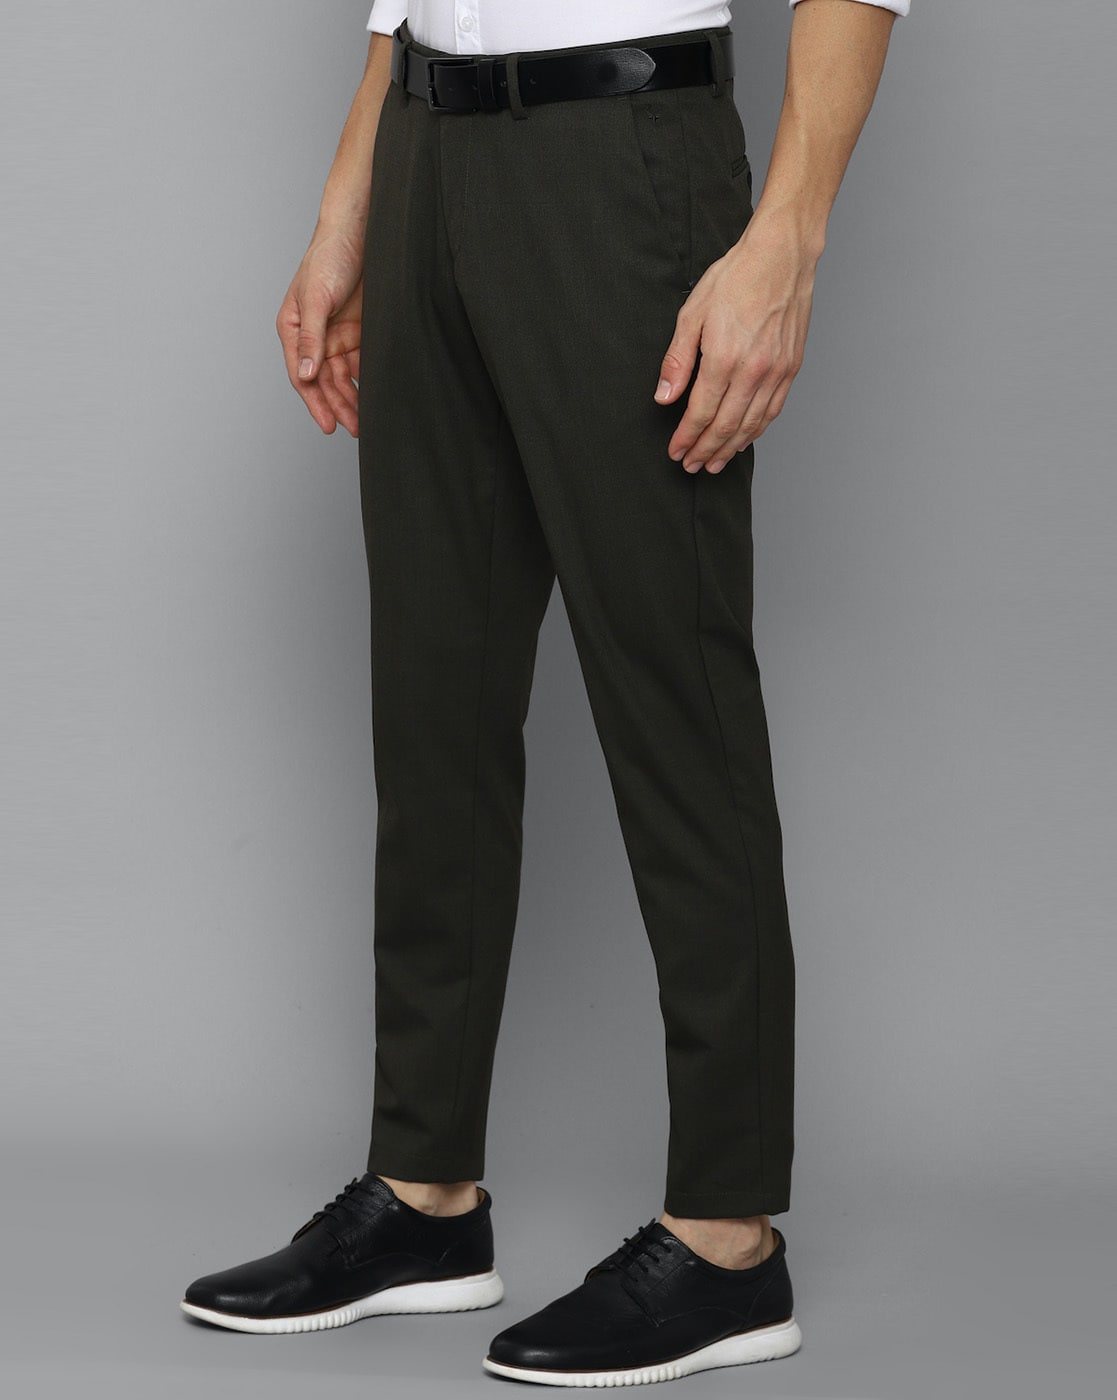 VEKDONE 2023 Mens Casual Capri Pants Harem Pants Breathable Summer Casual Pencil  Pants Trousers B Black,Large - Walmart.com